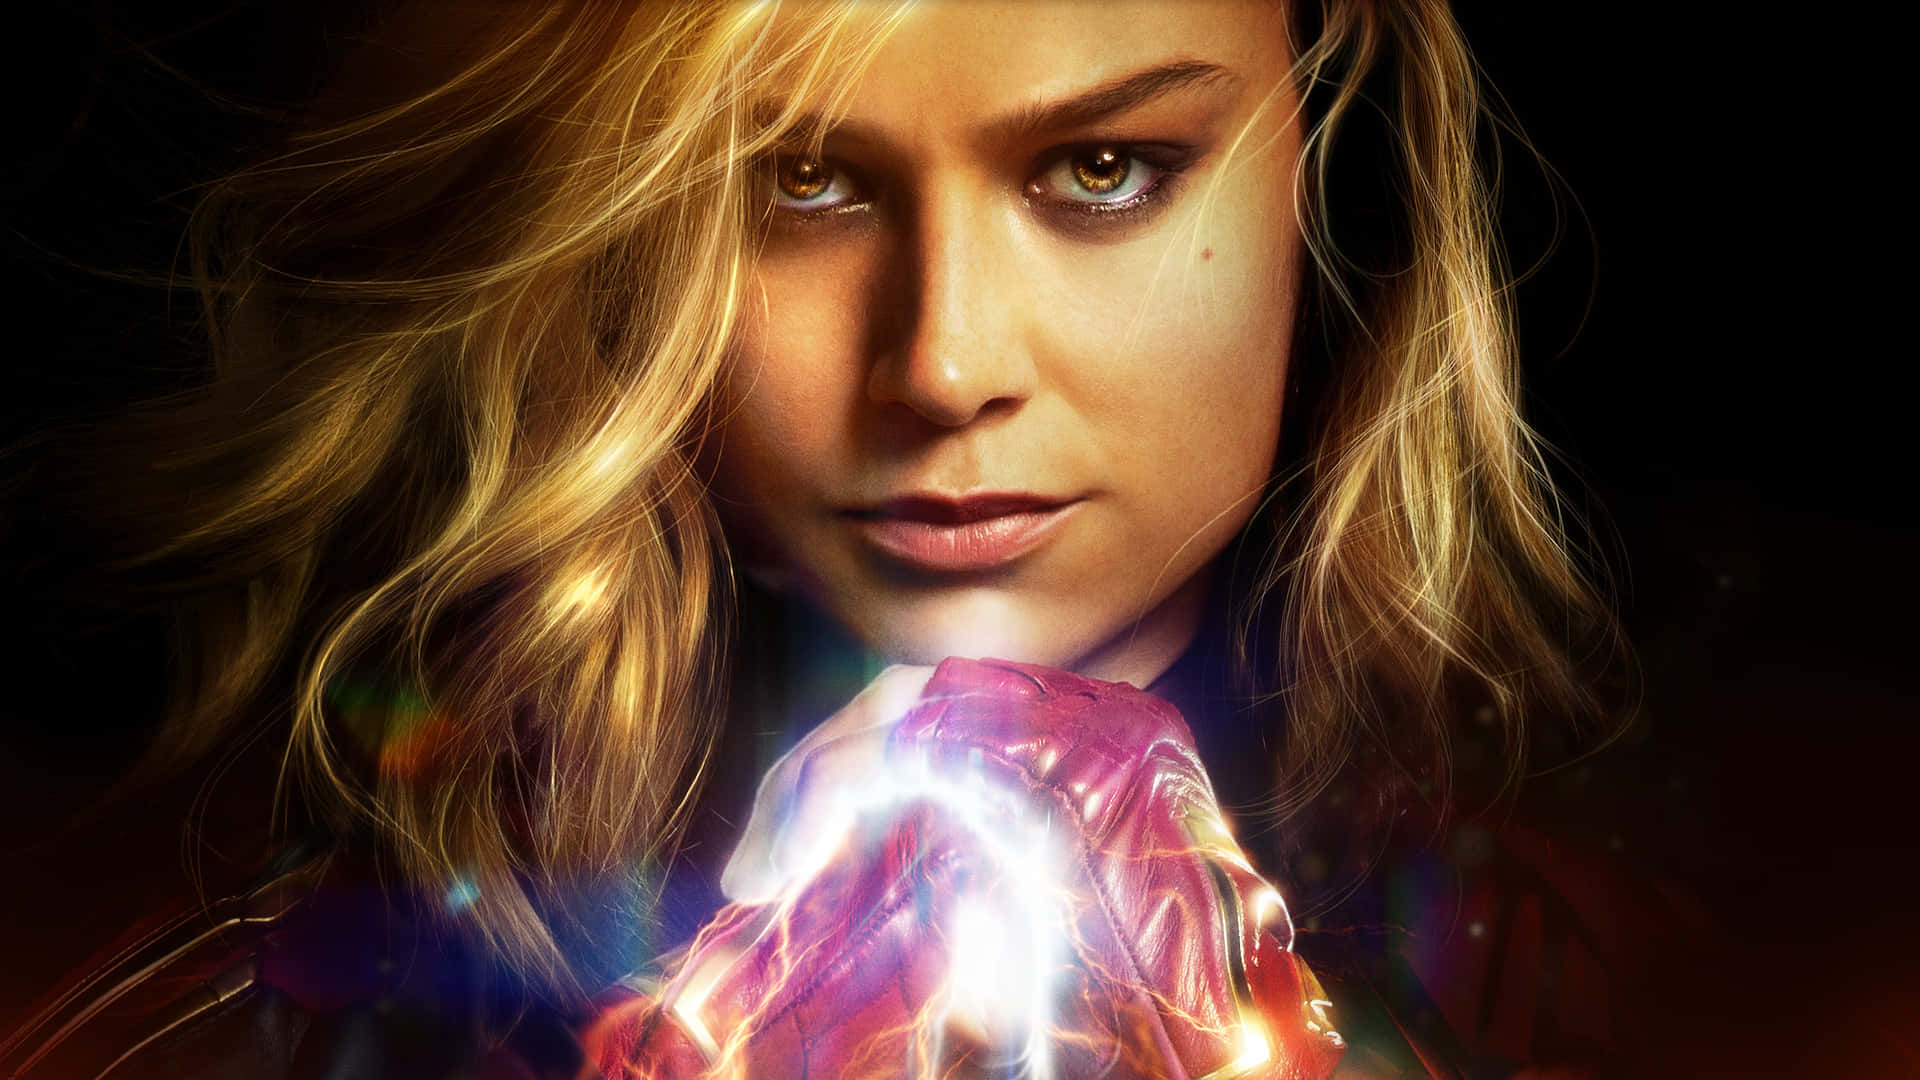 Brielarson Spielt Carol Danvers In Marvels Blockbuster Von 2019, Captain Marvel. Wallpaper